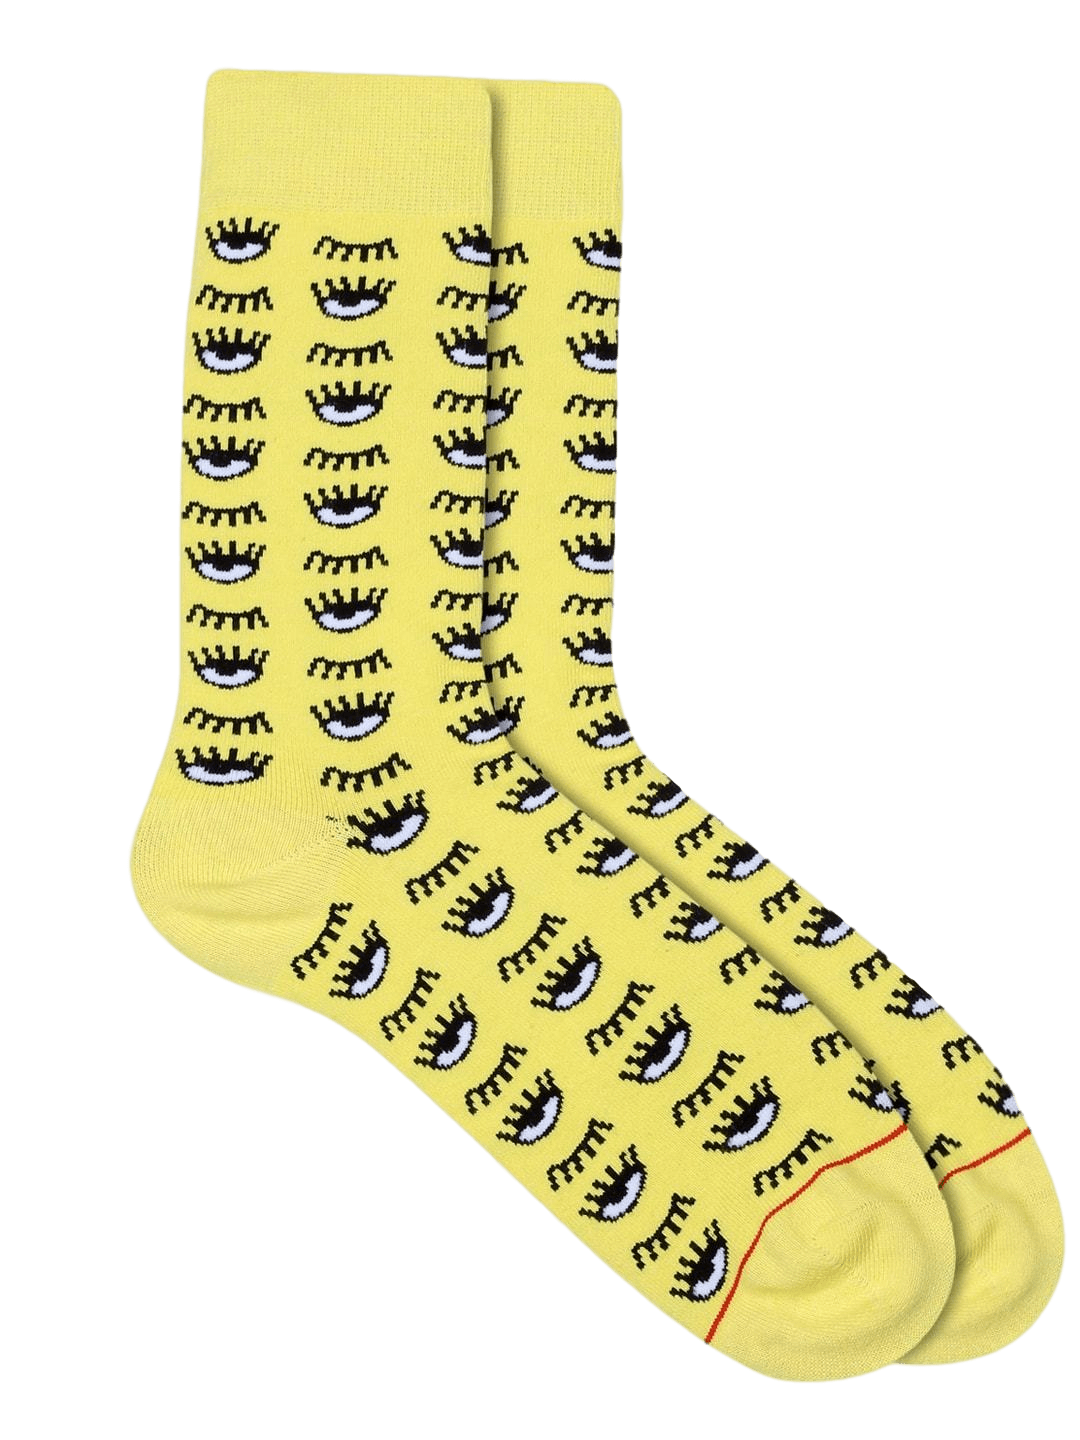 The Funky Monkey Socks